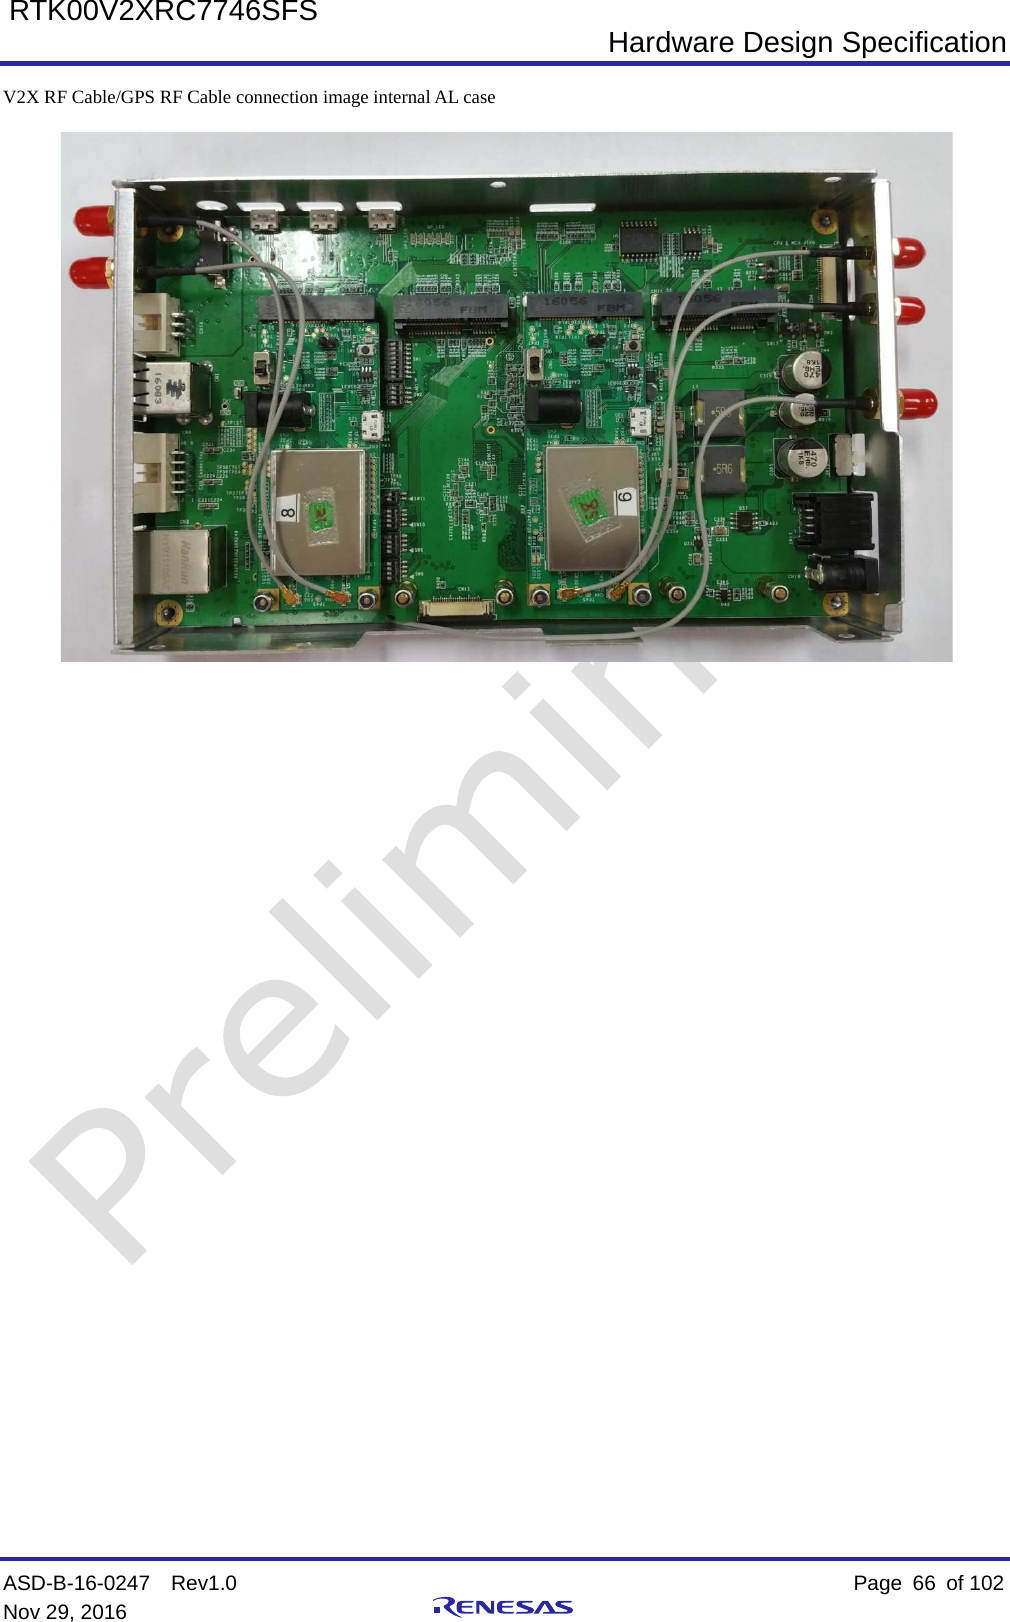  Hardware Design Specification ASD-B-16-0247  Rev1.0    Page  66 of 102 Nov 29, 2016     RTK00V2XRC7746SFS V2X RF Cable/GPS RF Cable connection image internal AL case                      